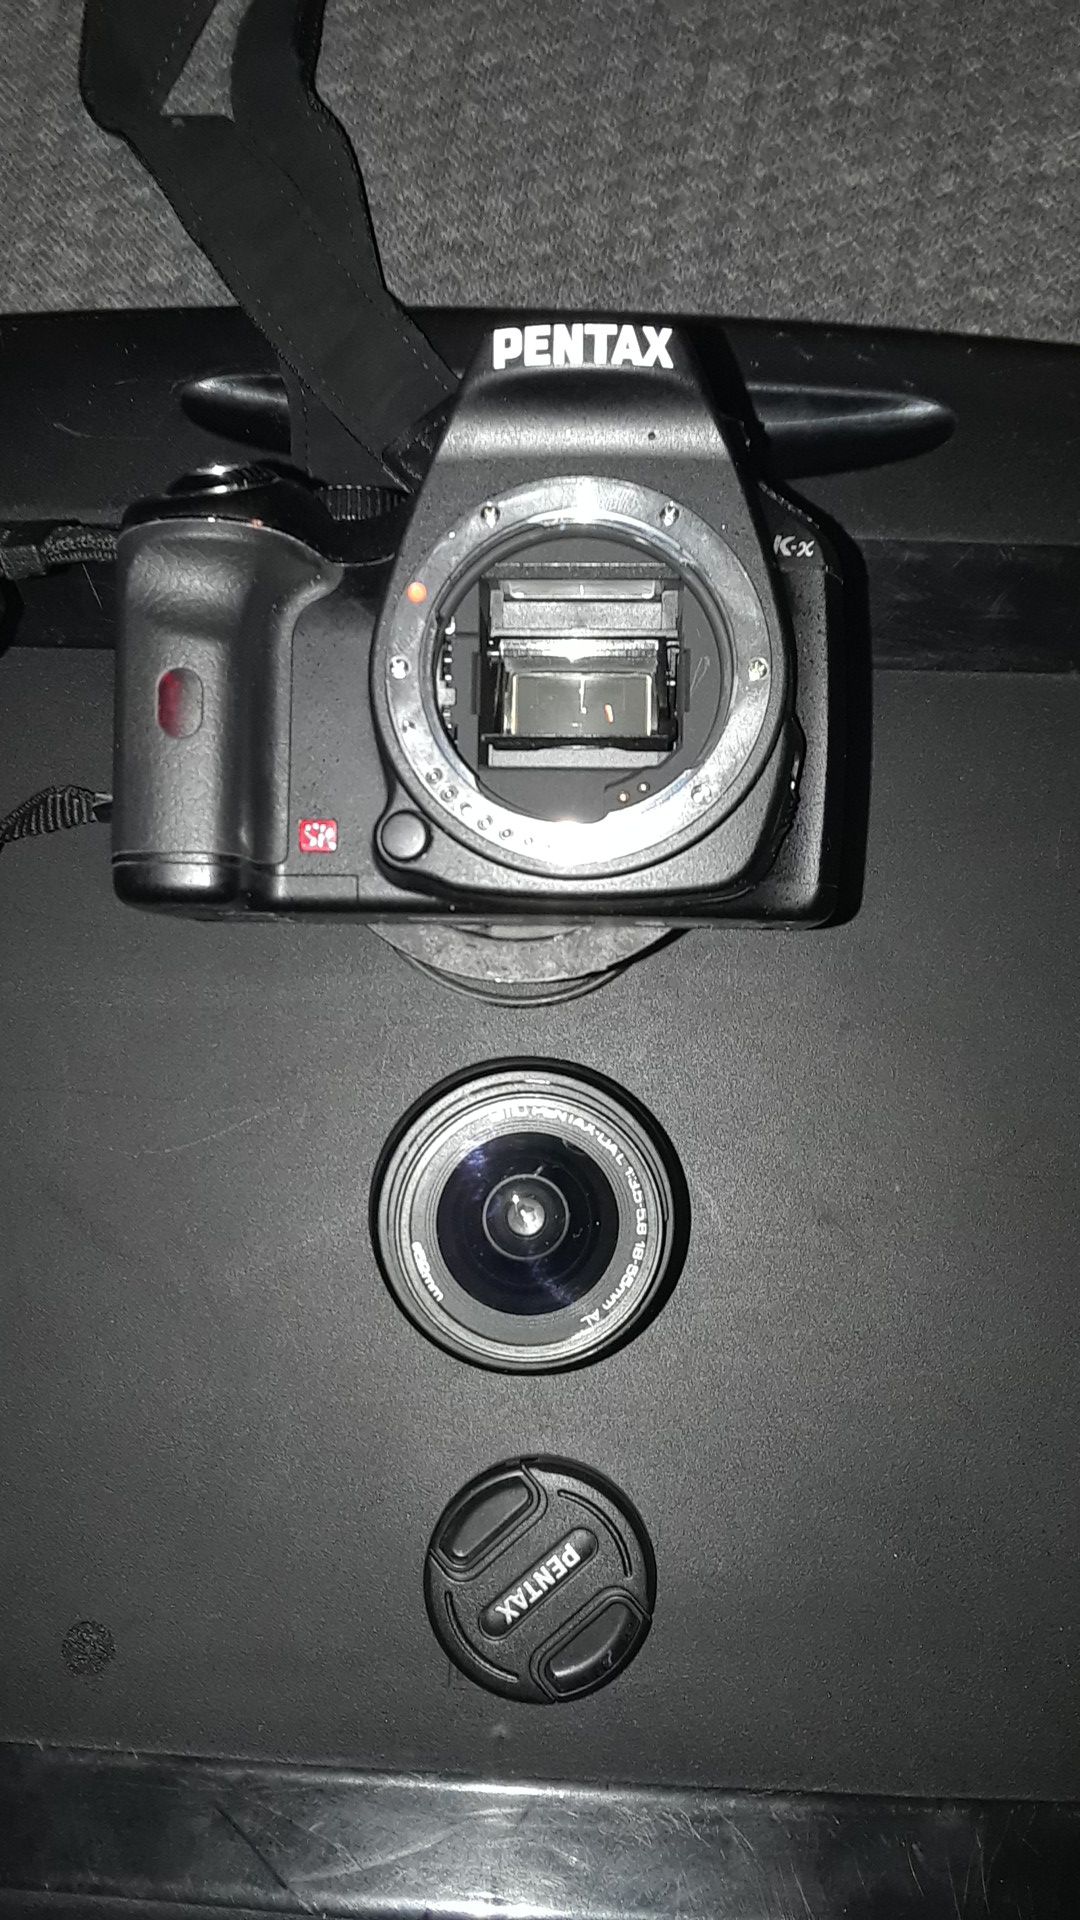 Pentax Digital Camera with 52mm circular polarizer